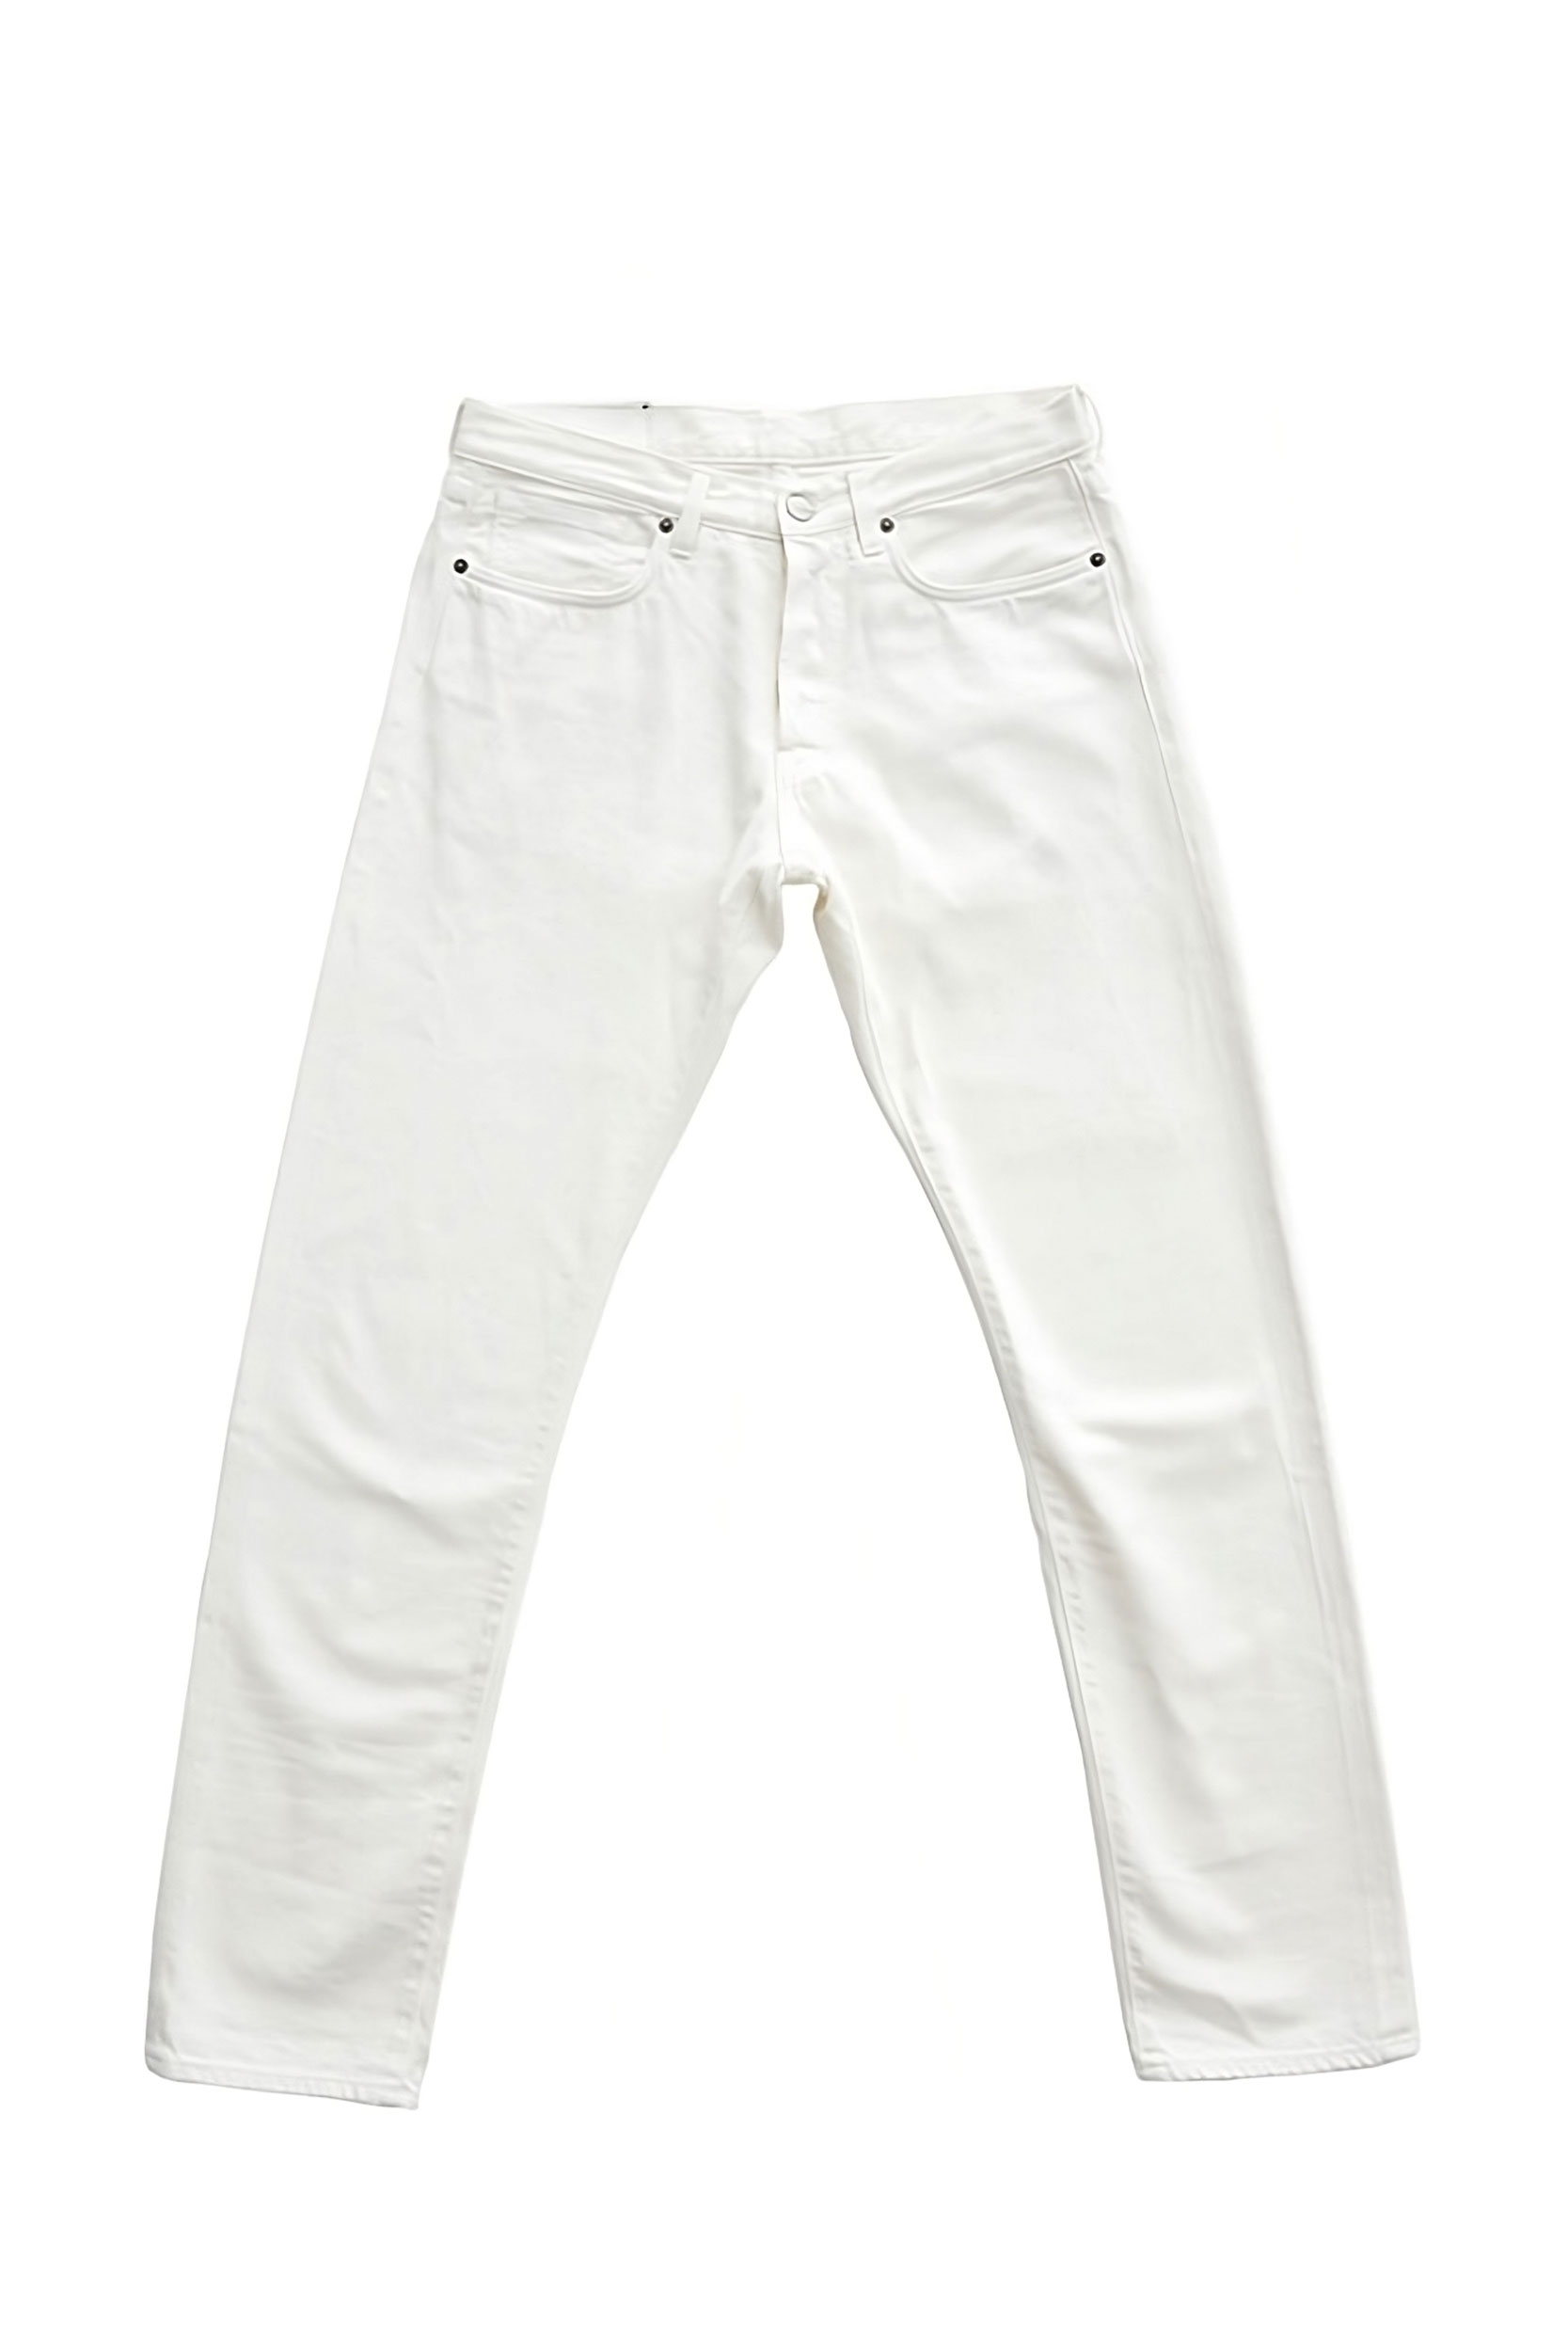 United Colors of Benetton Men's Skinny Jeans (23P4L23R7089I101_White :  Amazon.in: Fashion